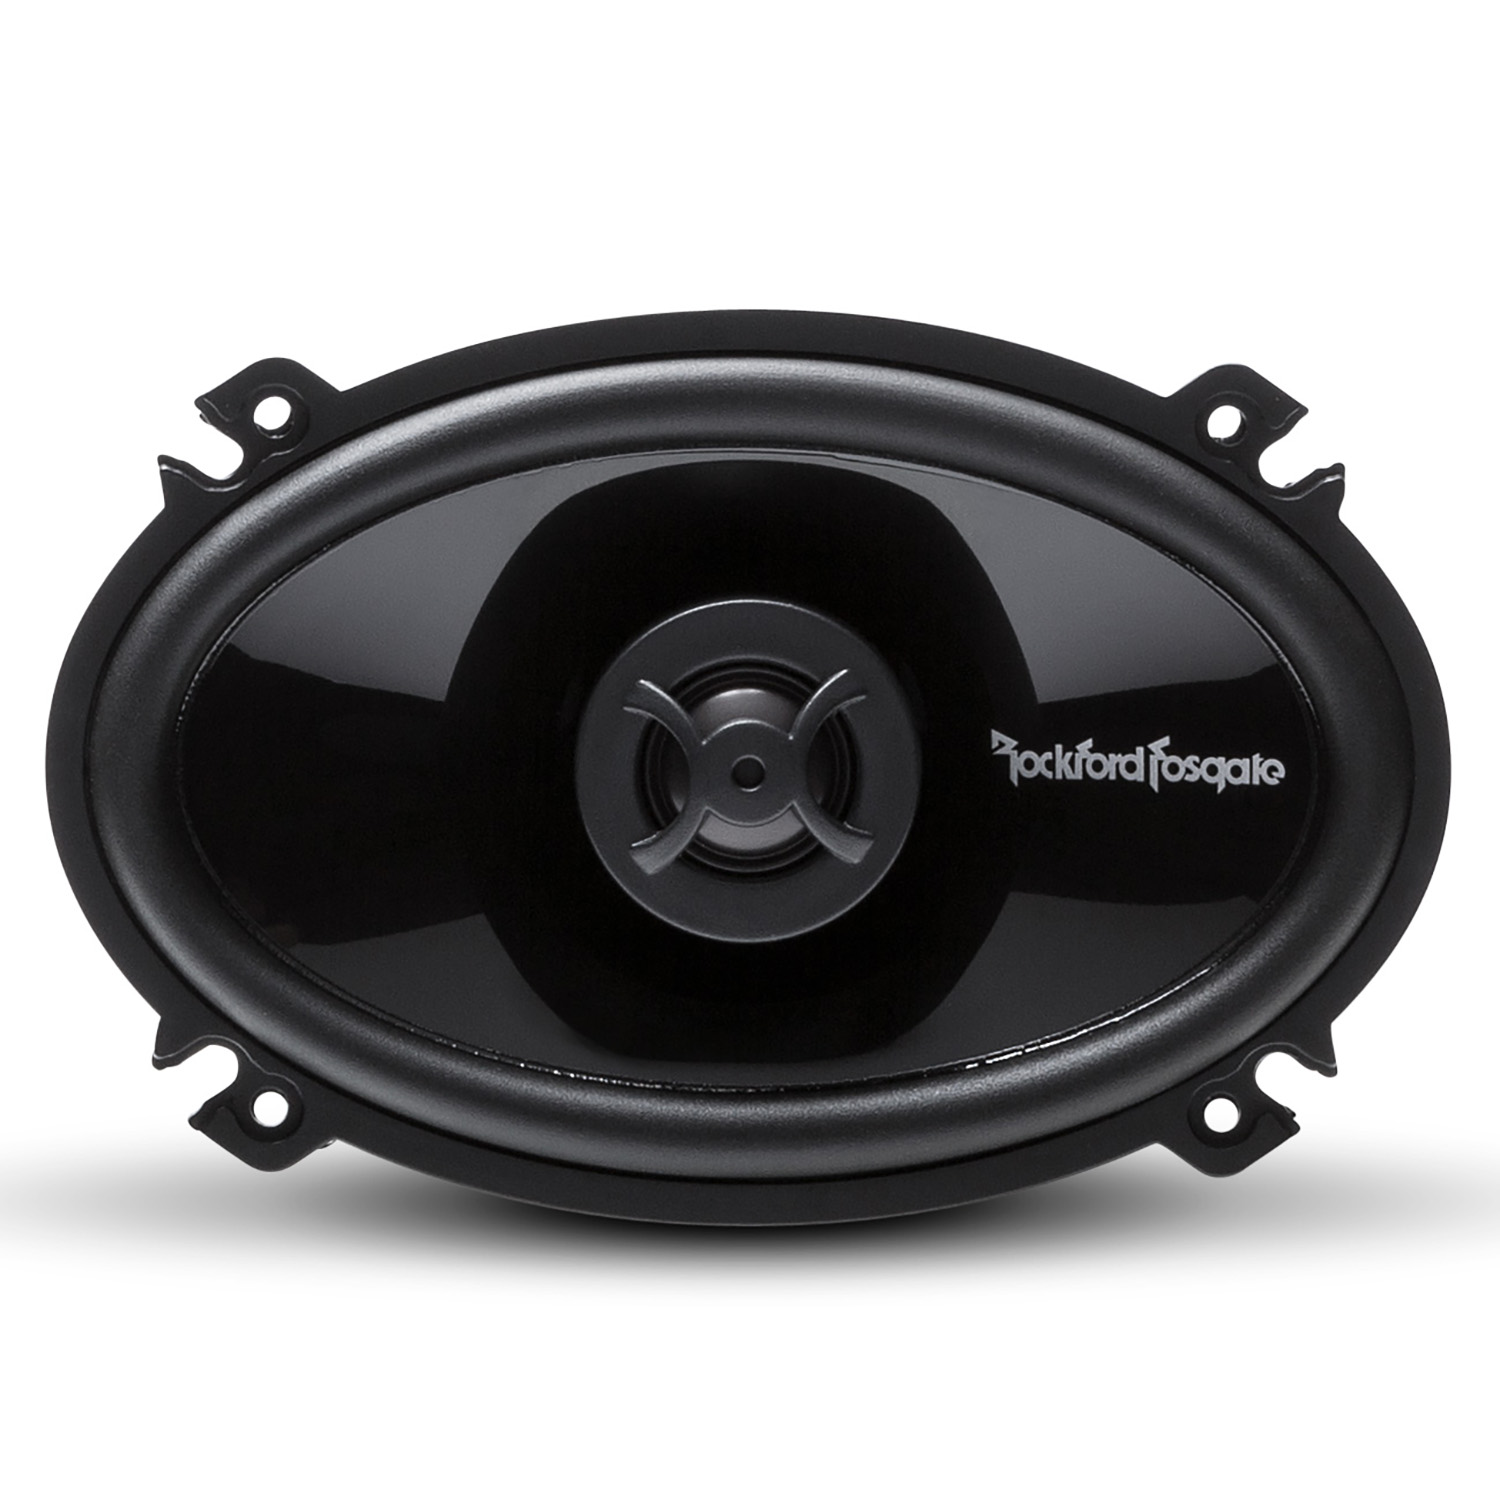 Rockford Fosgate P1462 Punch 4"x 6" 2-way Full Range Speaker (Pair) - image 1 of 6